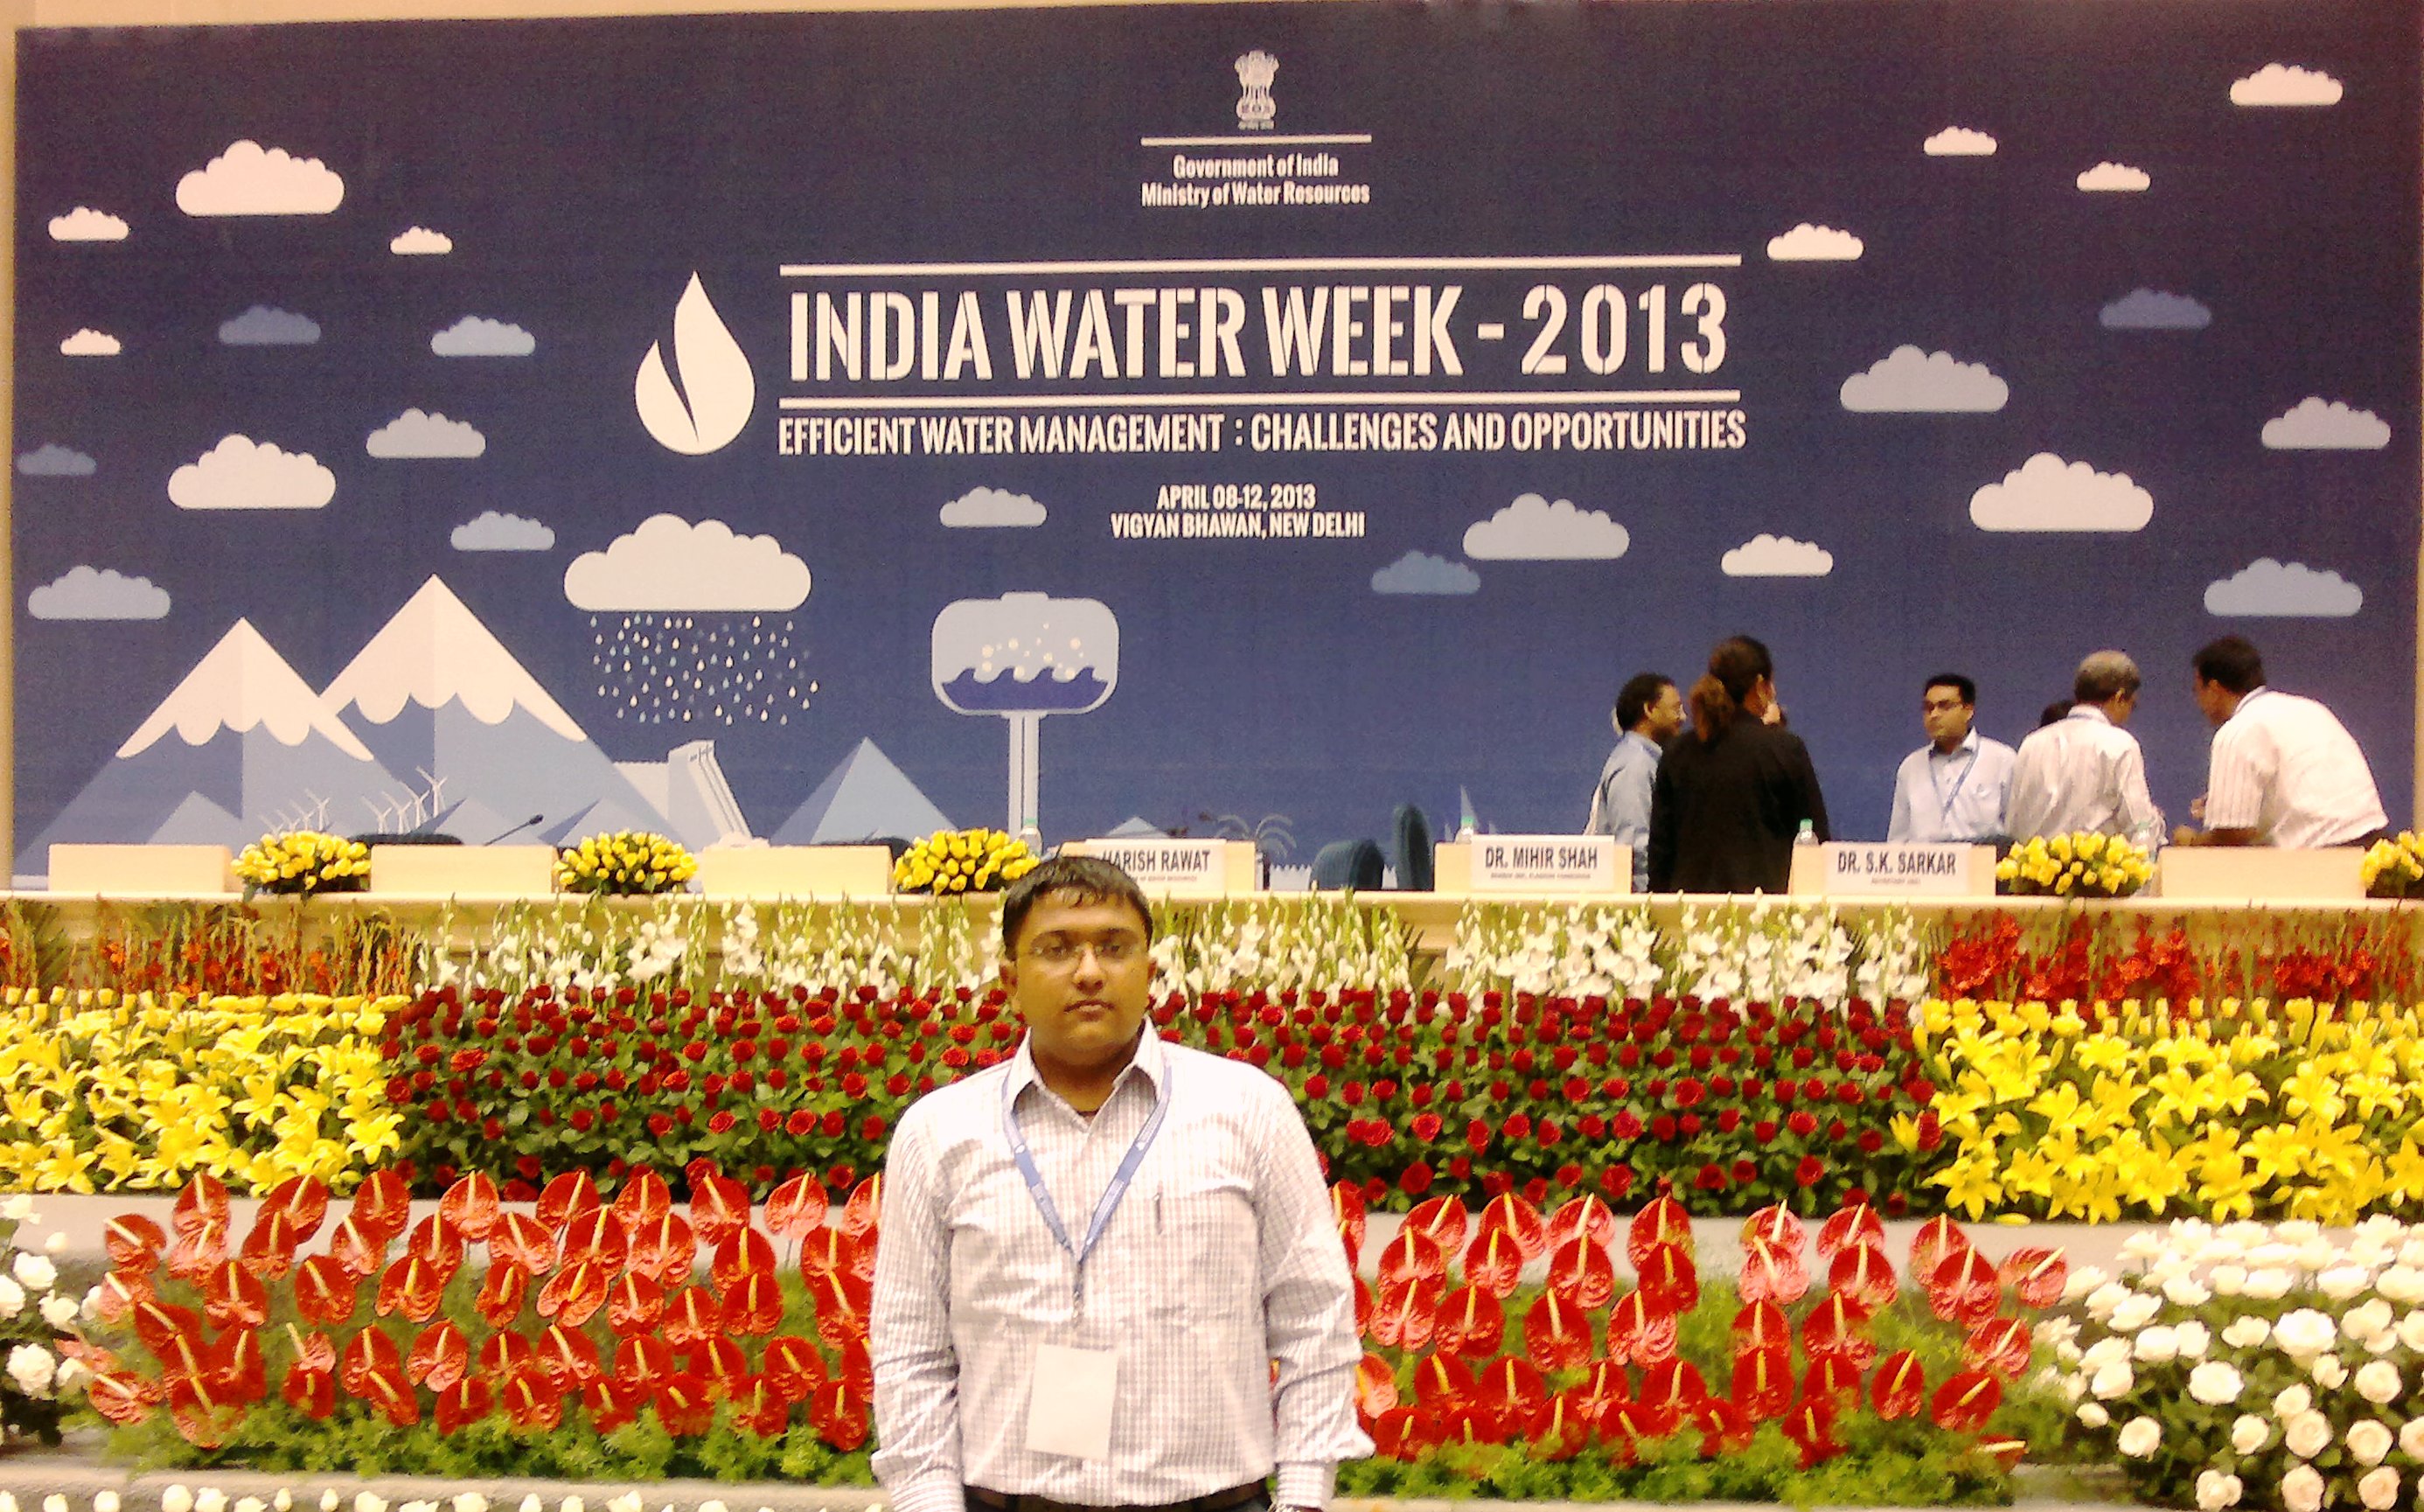 Dhiren Darji, Gujarat Water Supply & Sewerage Board